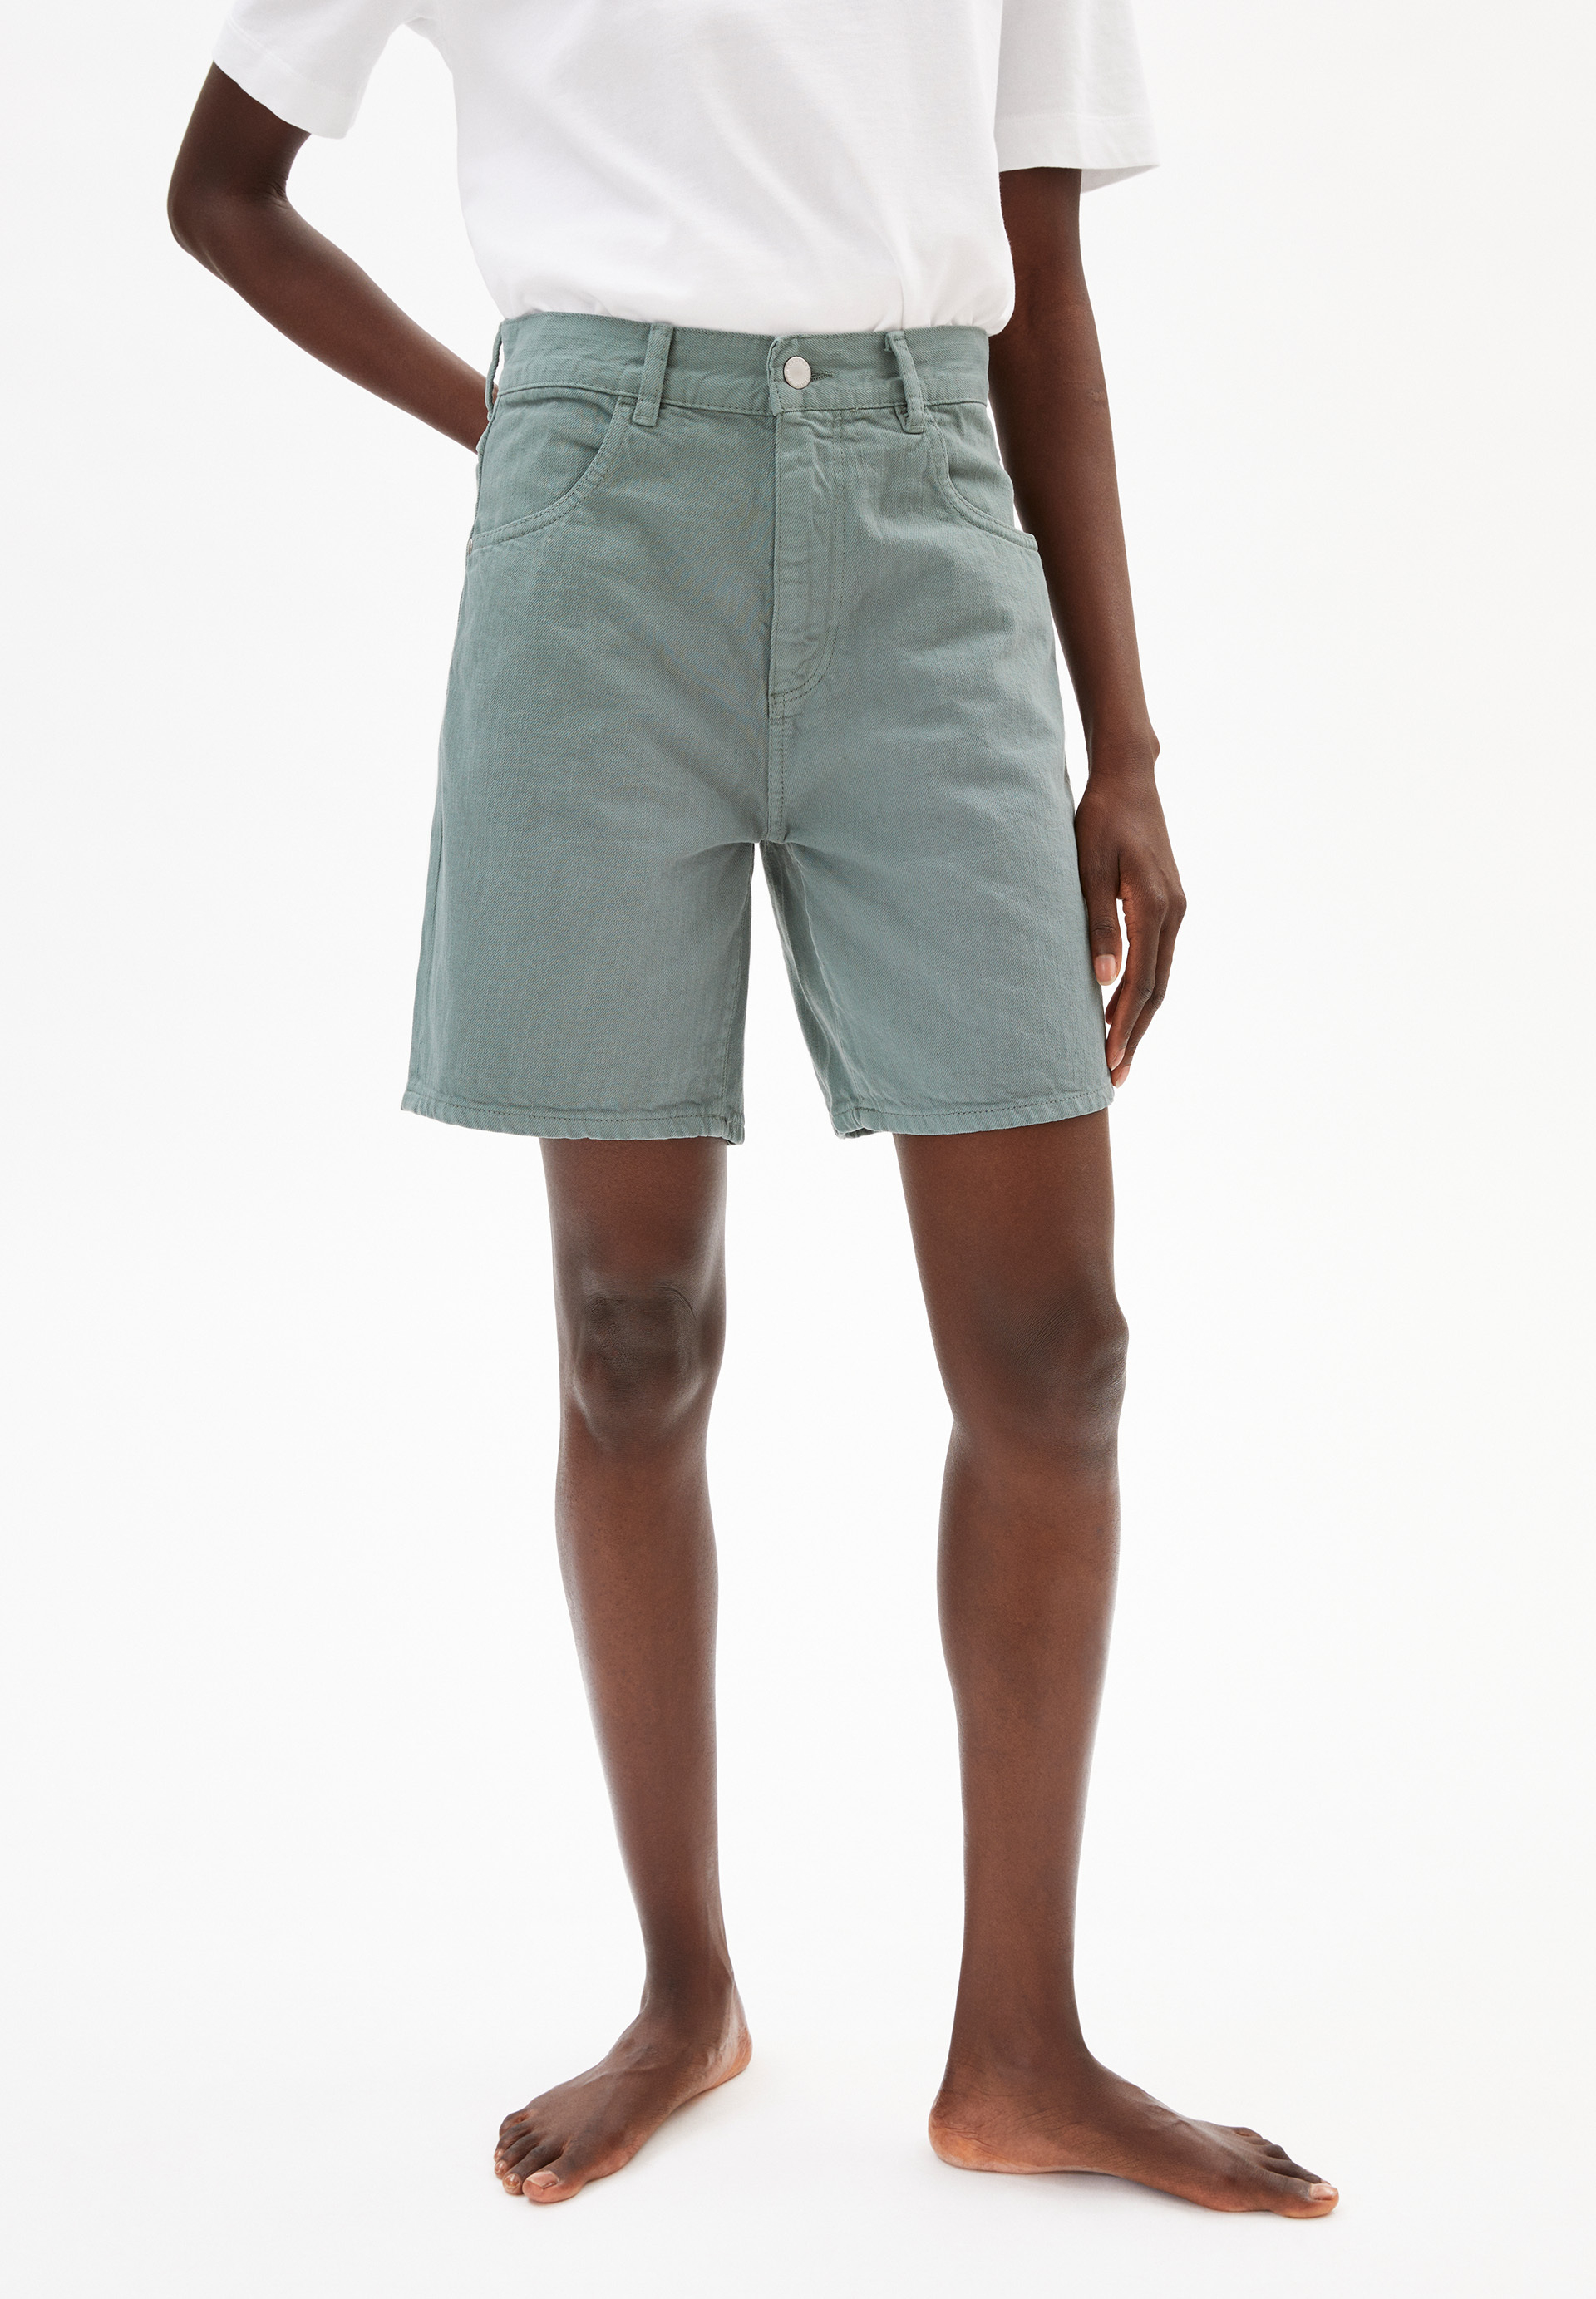 FREYMAA UNDYED Denim Shorts made of Organic Cotton Mix (recycled)